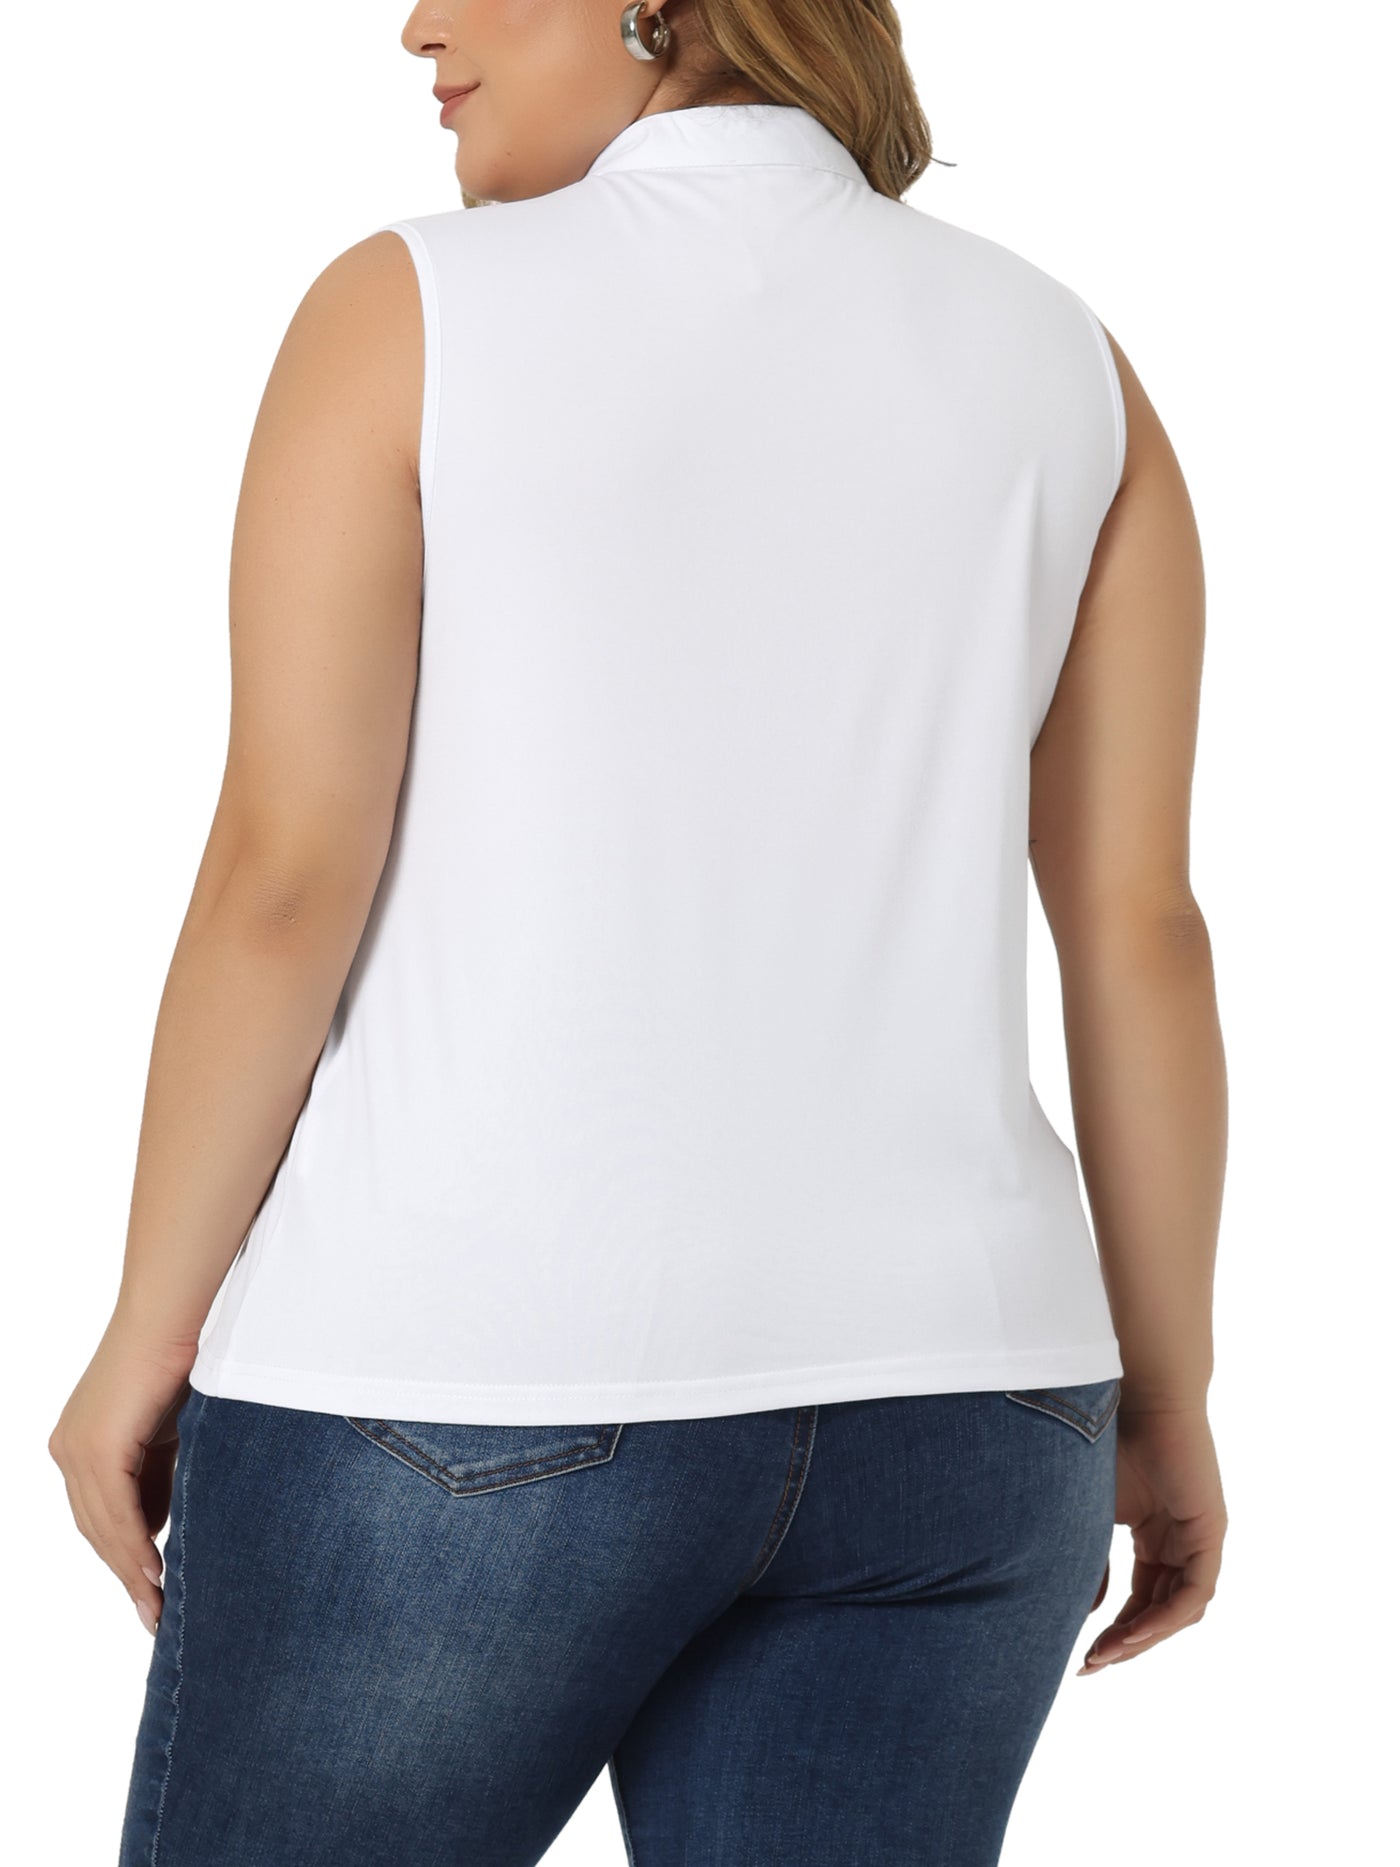 Bublédon Plus Size Tops for Women V Neck Sleeveless Work Shirts Summer 2024 Blouses